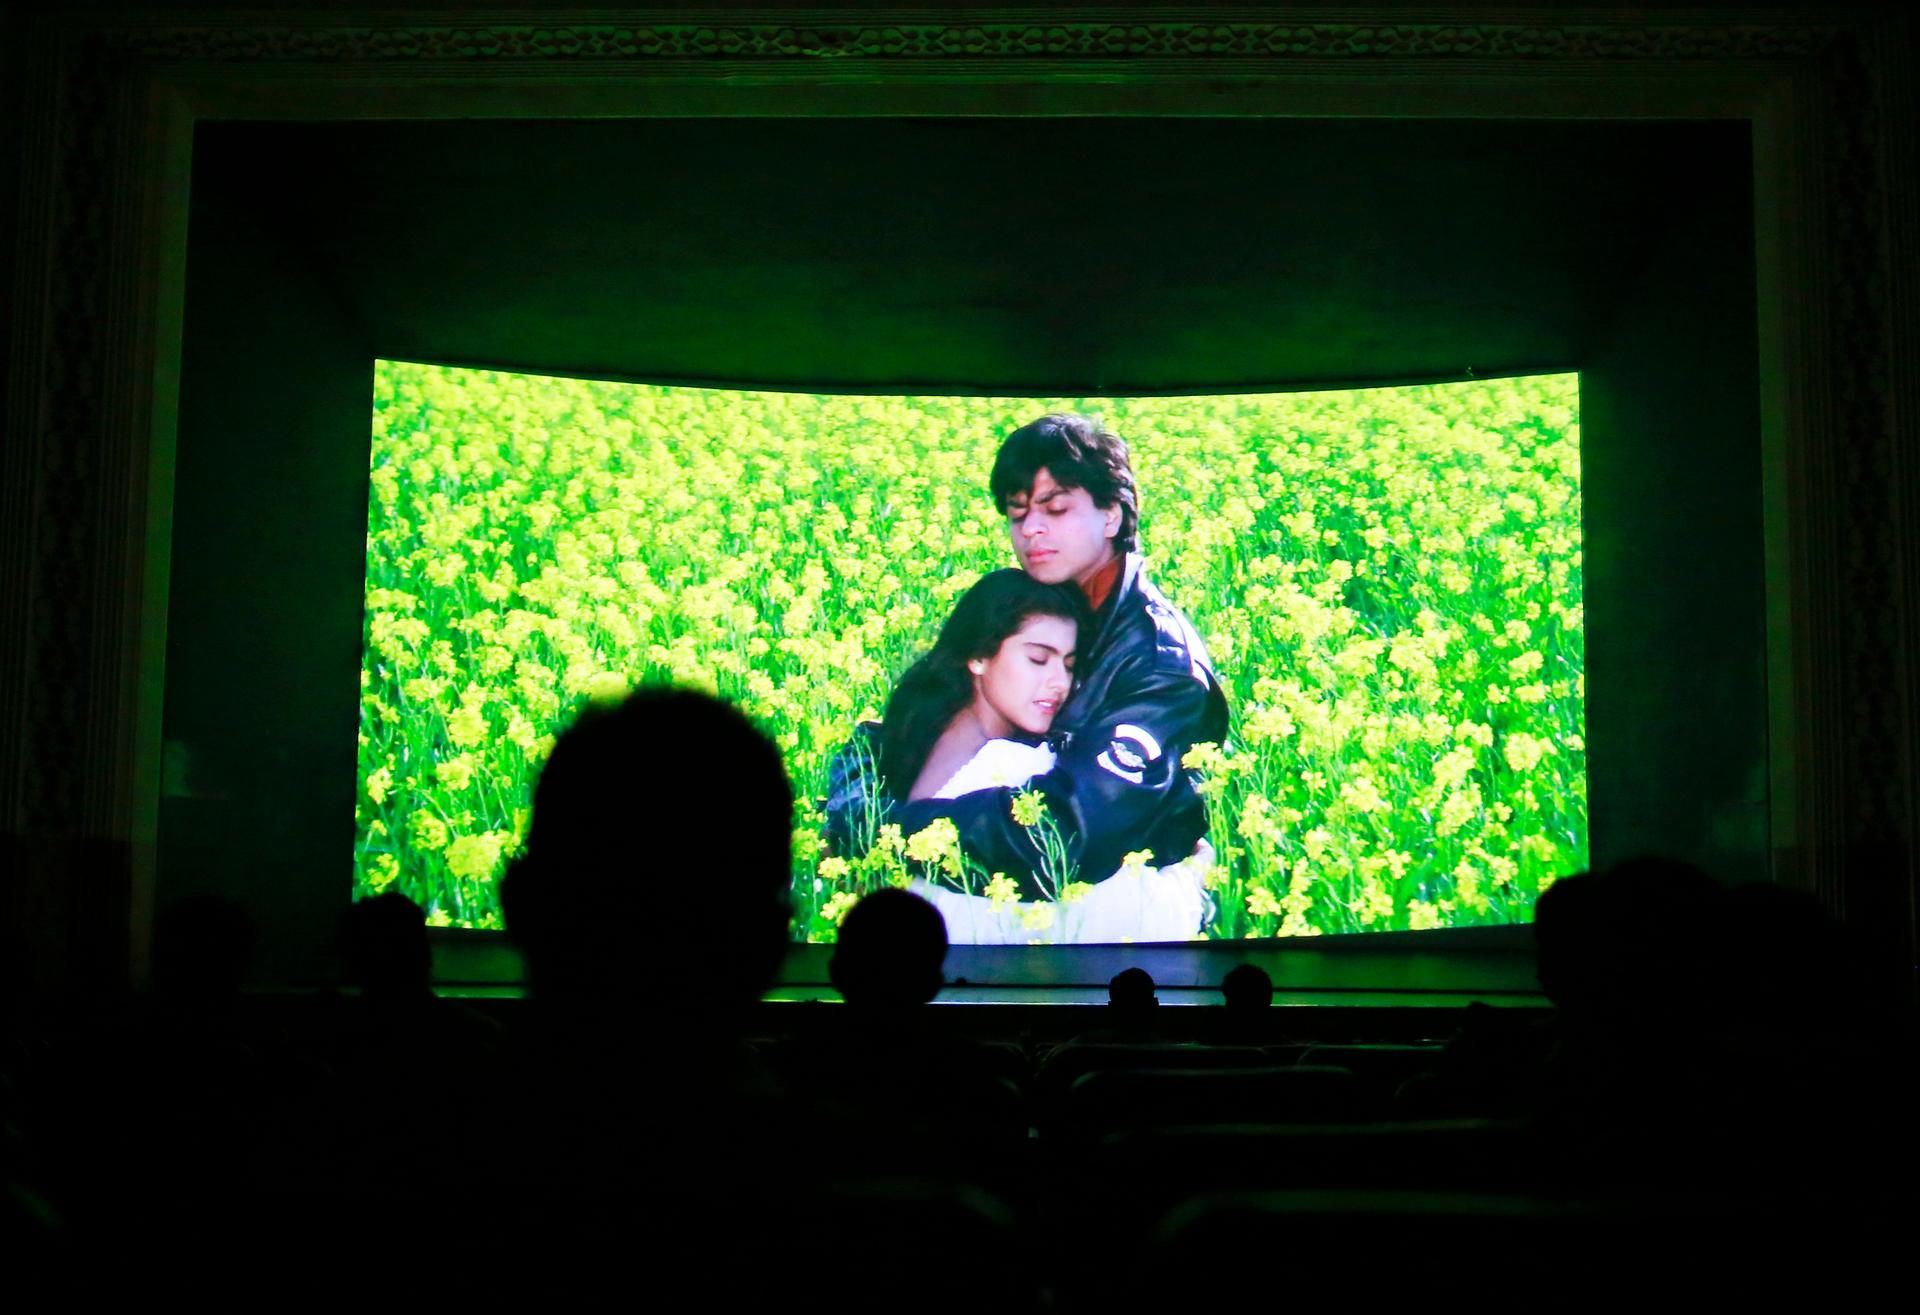 Inside the Mumbai theater, moviegoers look at the screen.